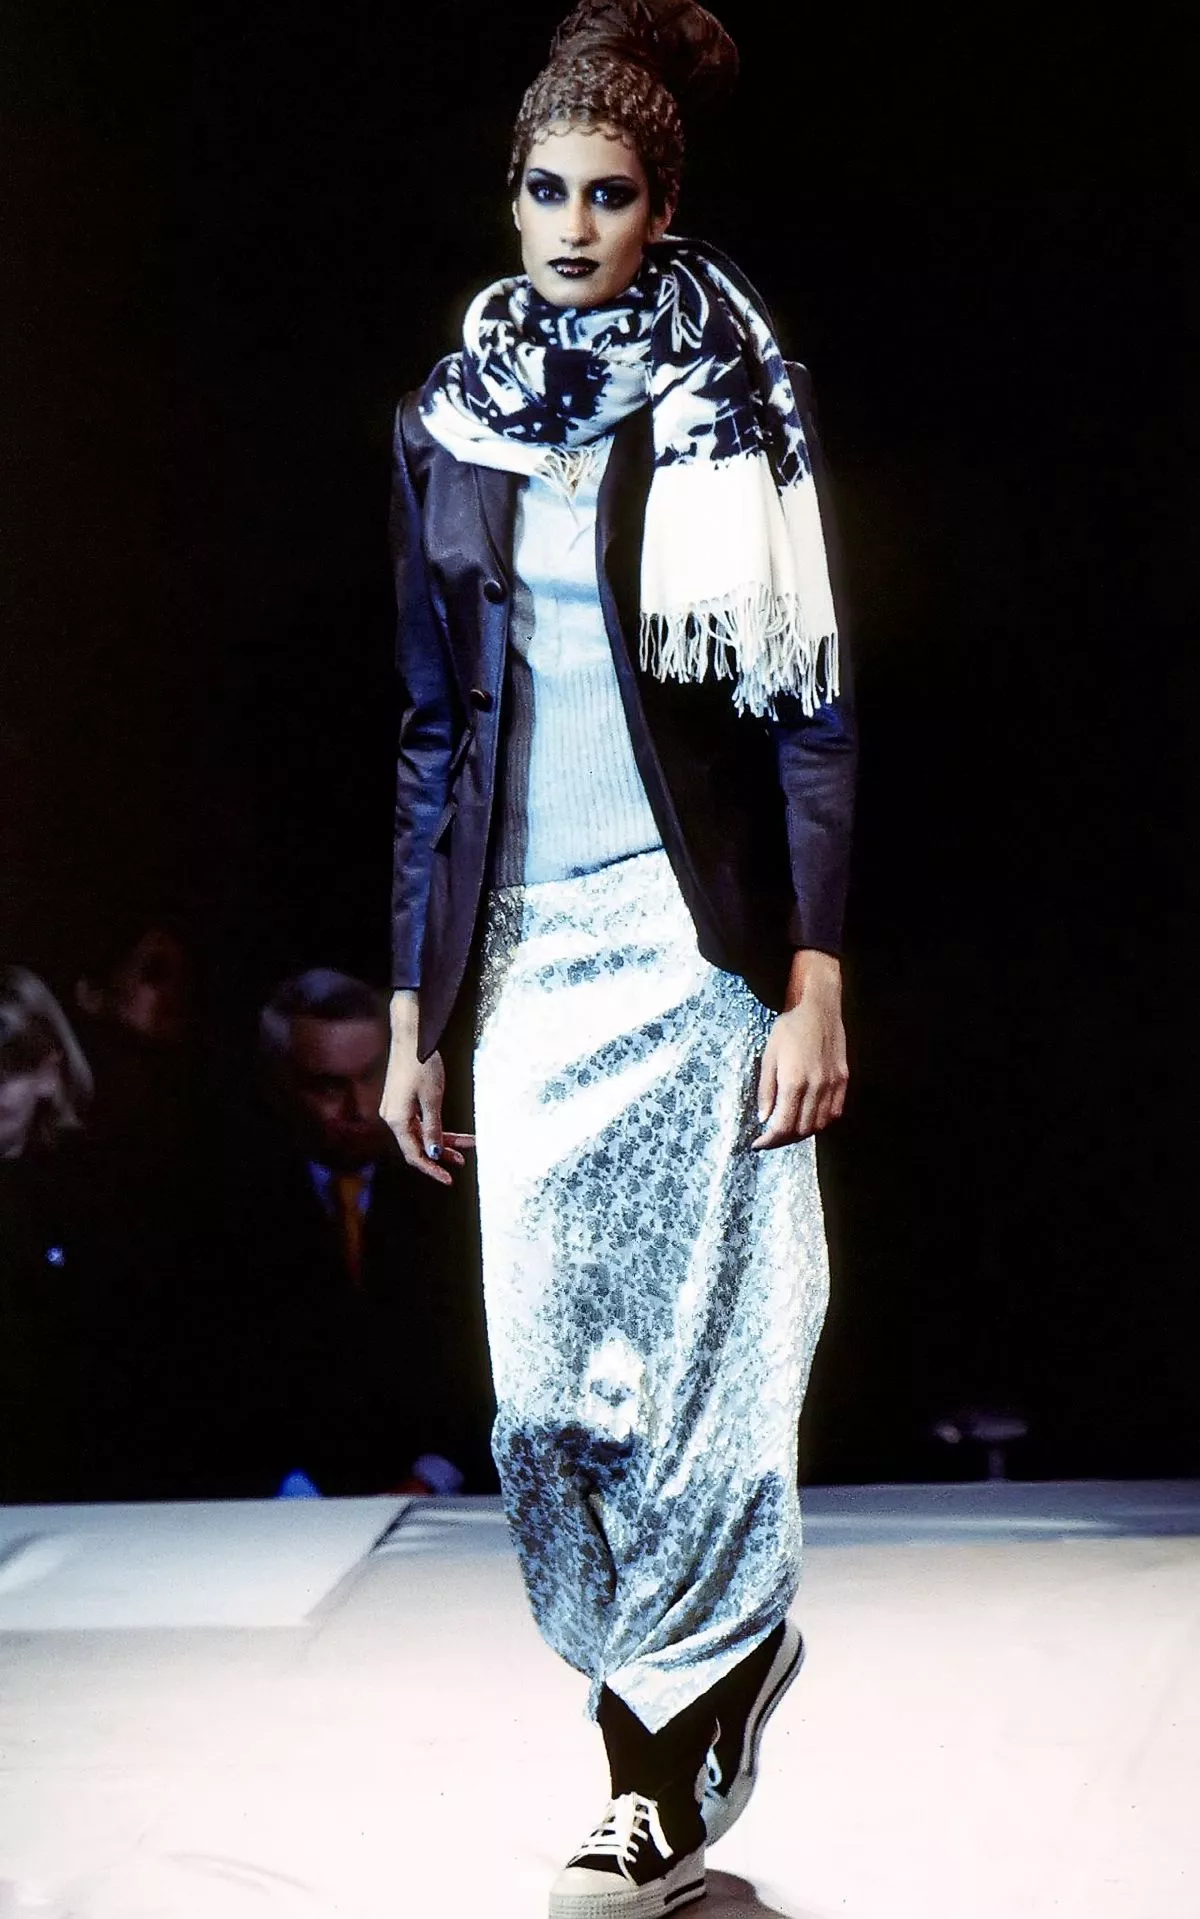 Ясмин Гаури на шоу Jean Paul Gaultier Ready-to-Wear Осень/Зима 1997/98